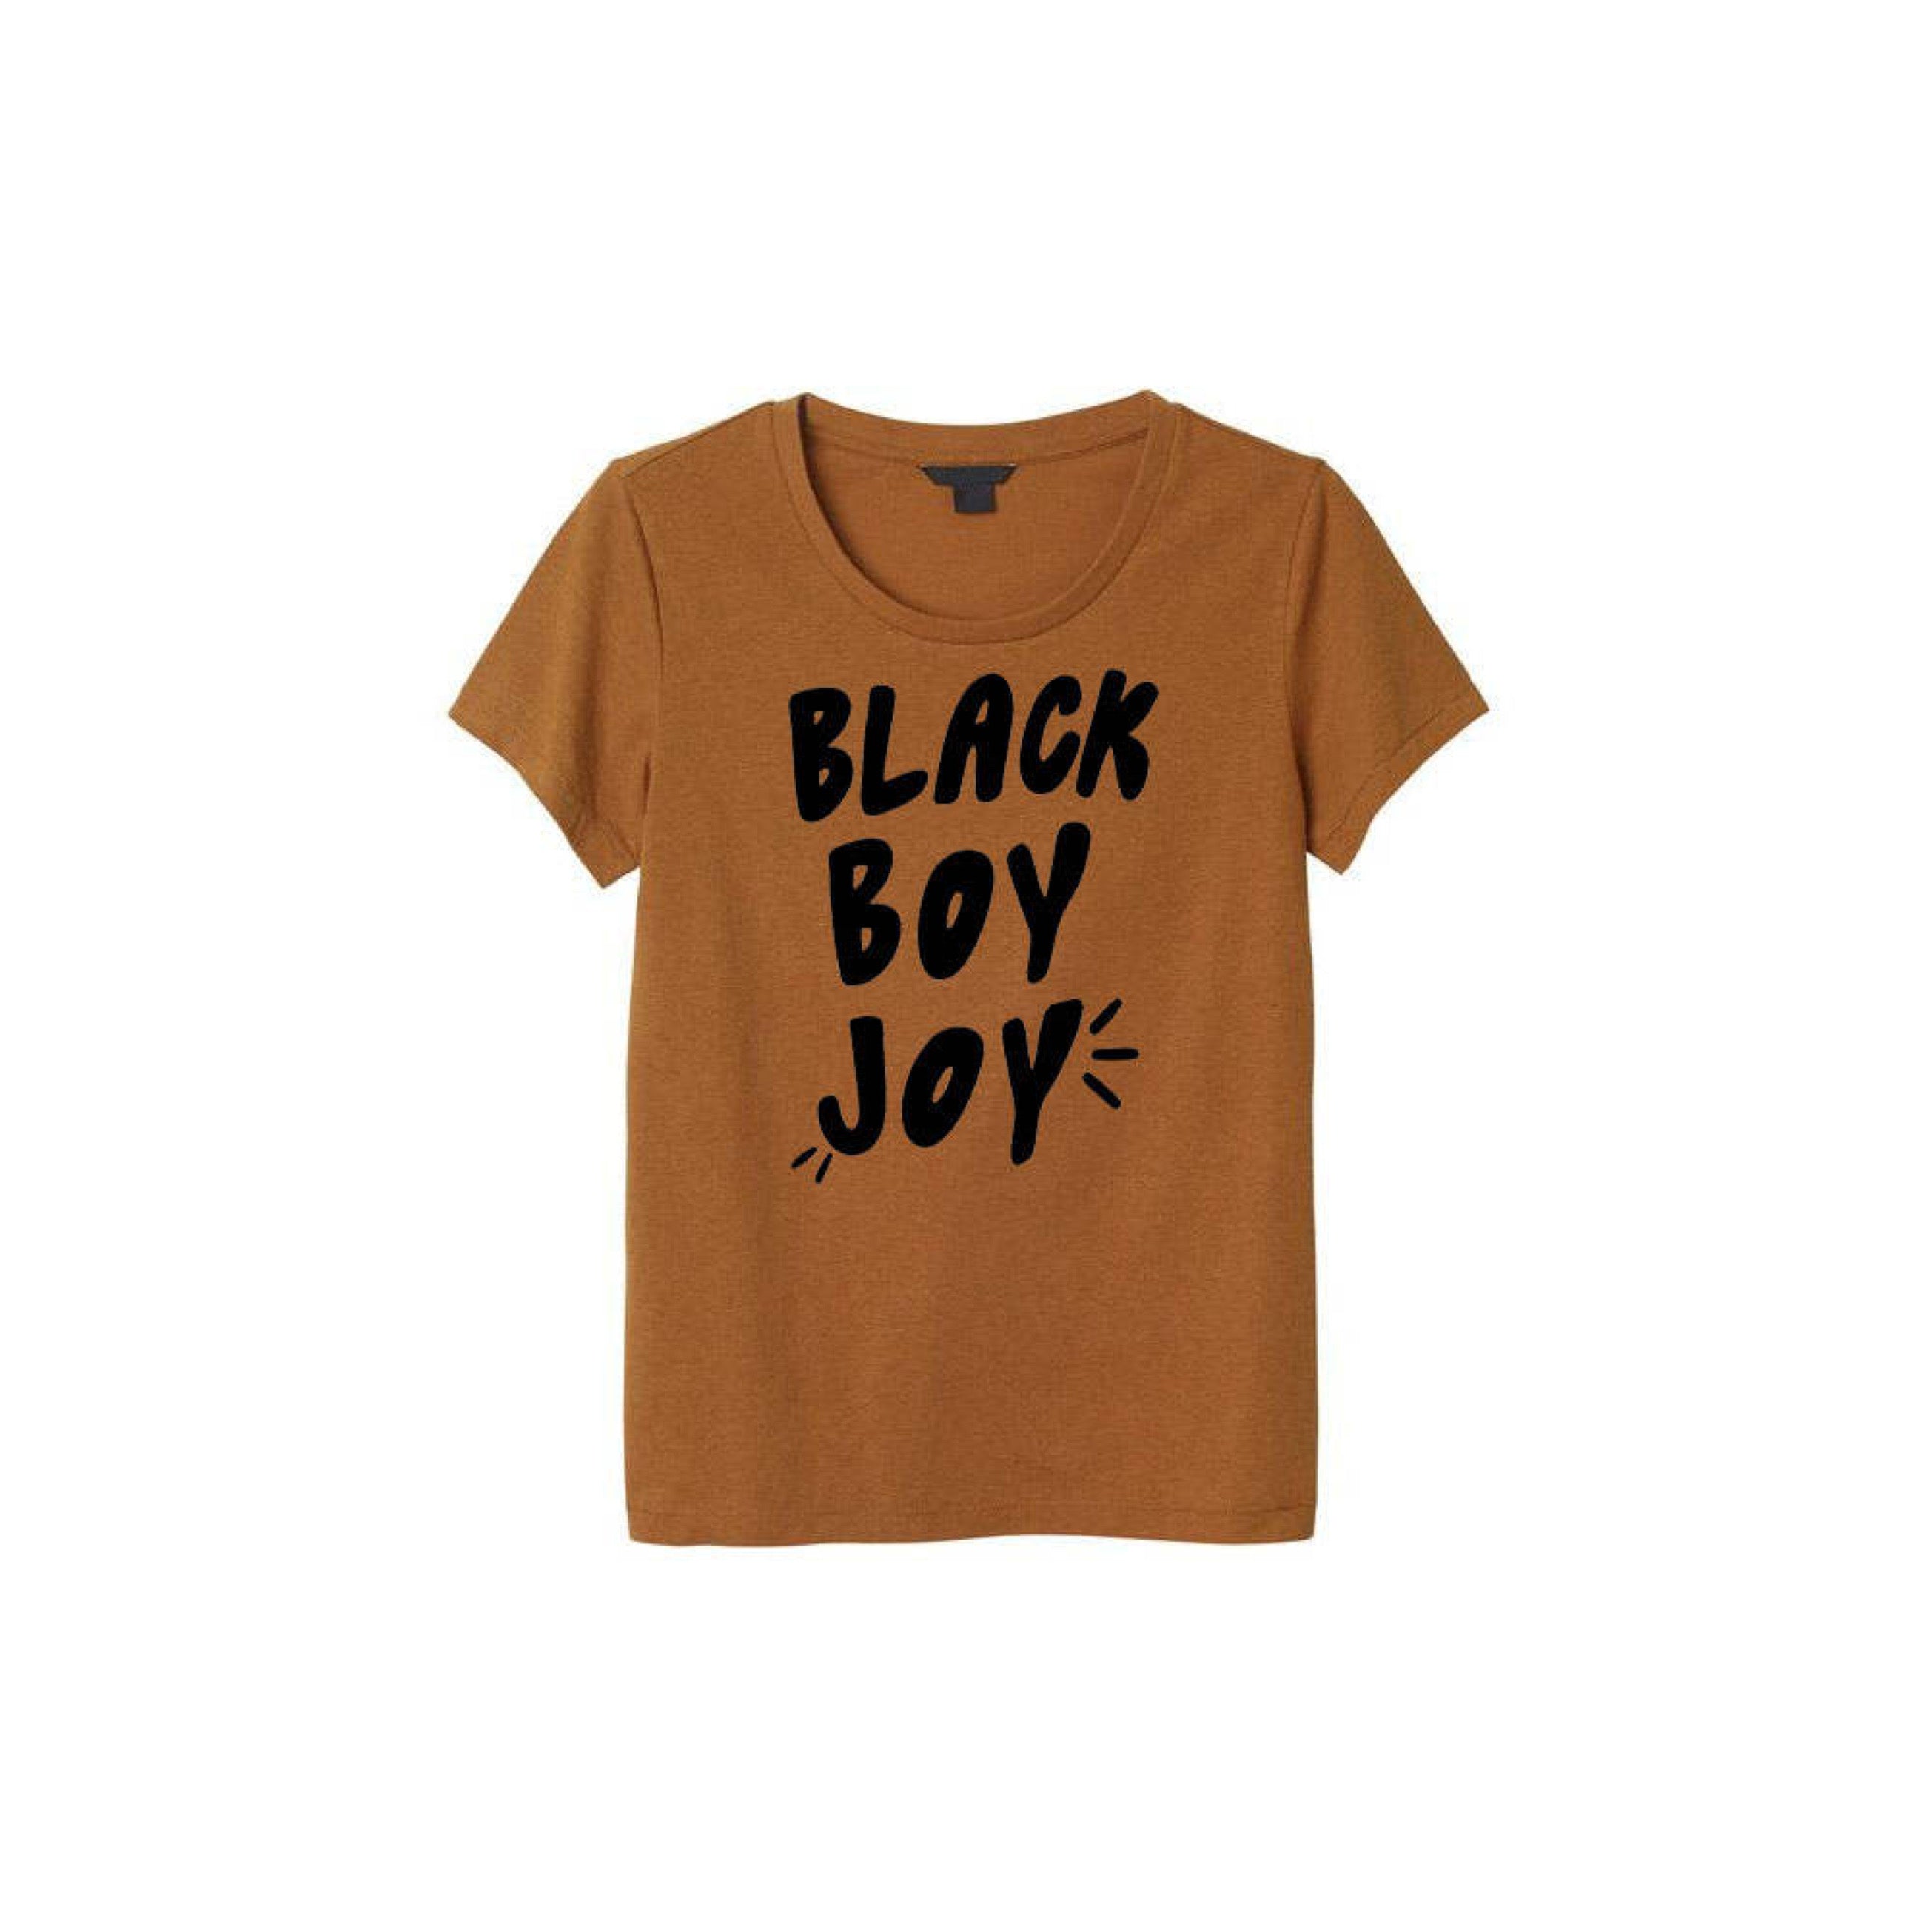 Black Boy Joy Kids Tee